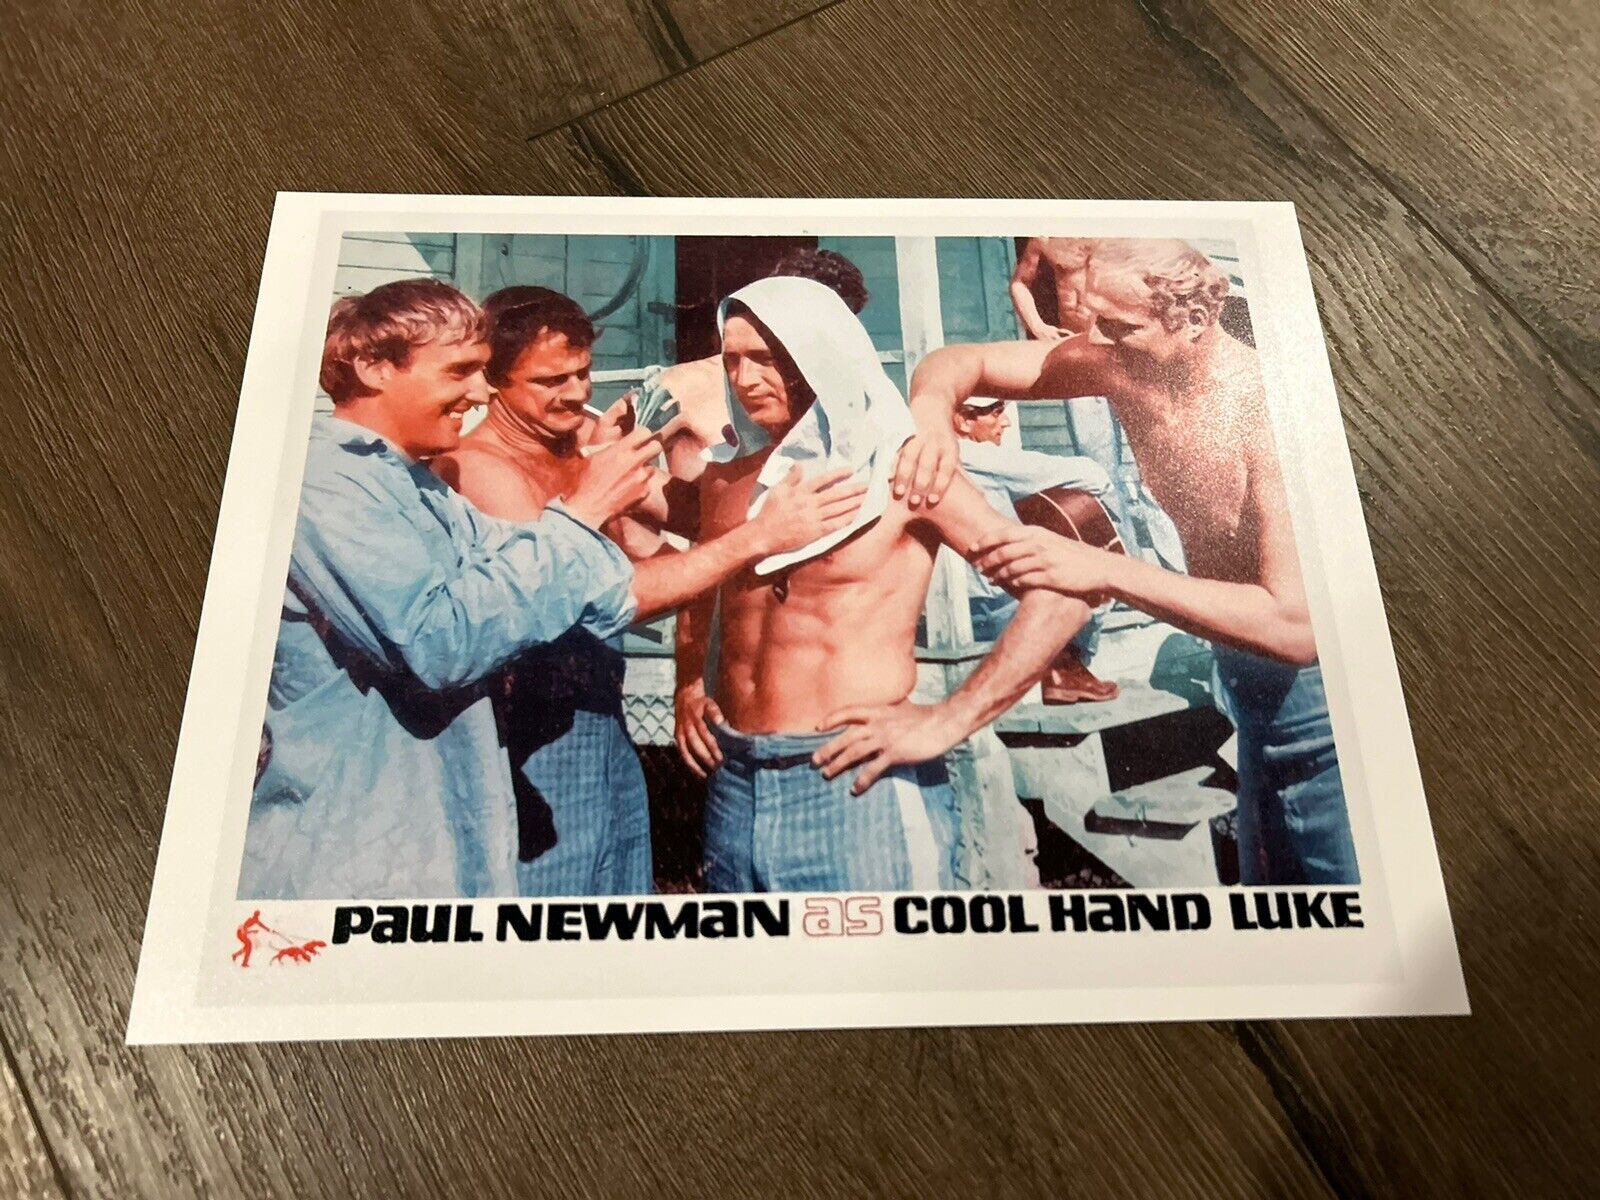 PAUL NEWMAN Cool Hand Luke Art Print Photo 11x14” Poster Prison Shirtless Male